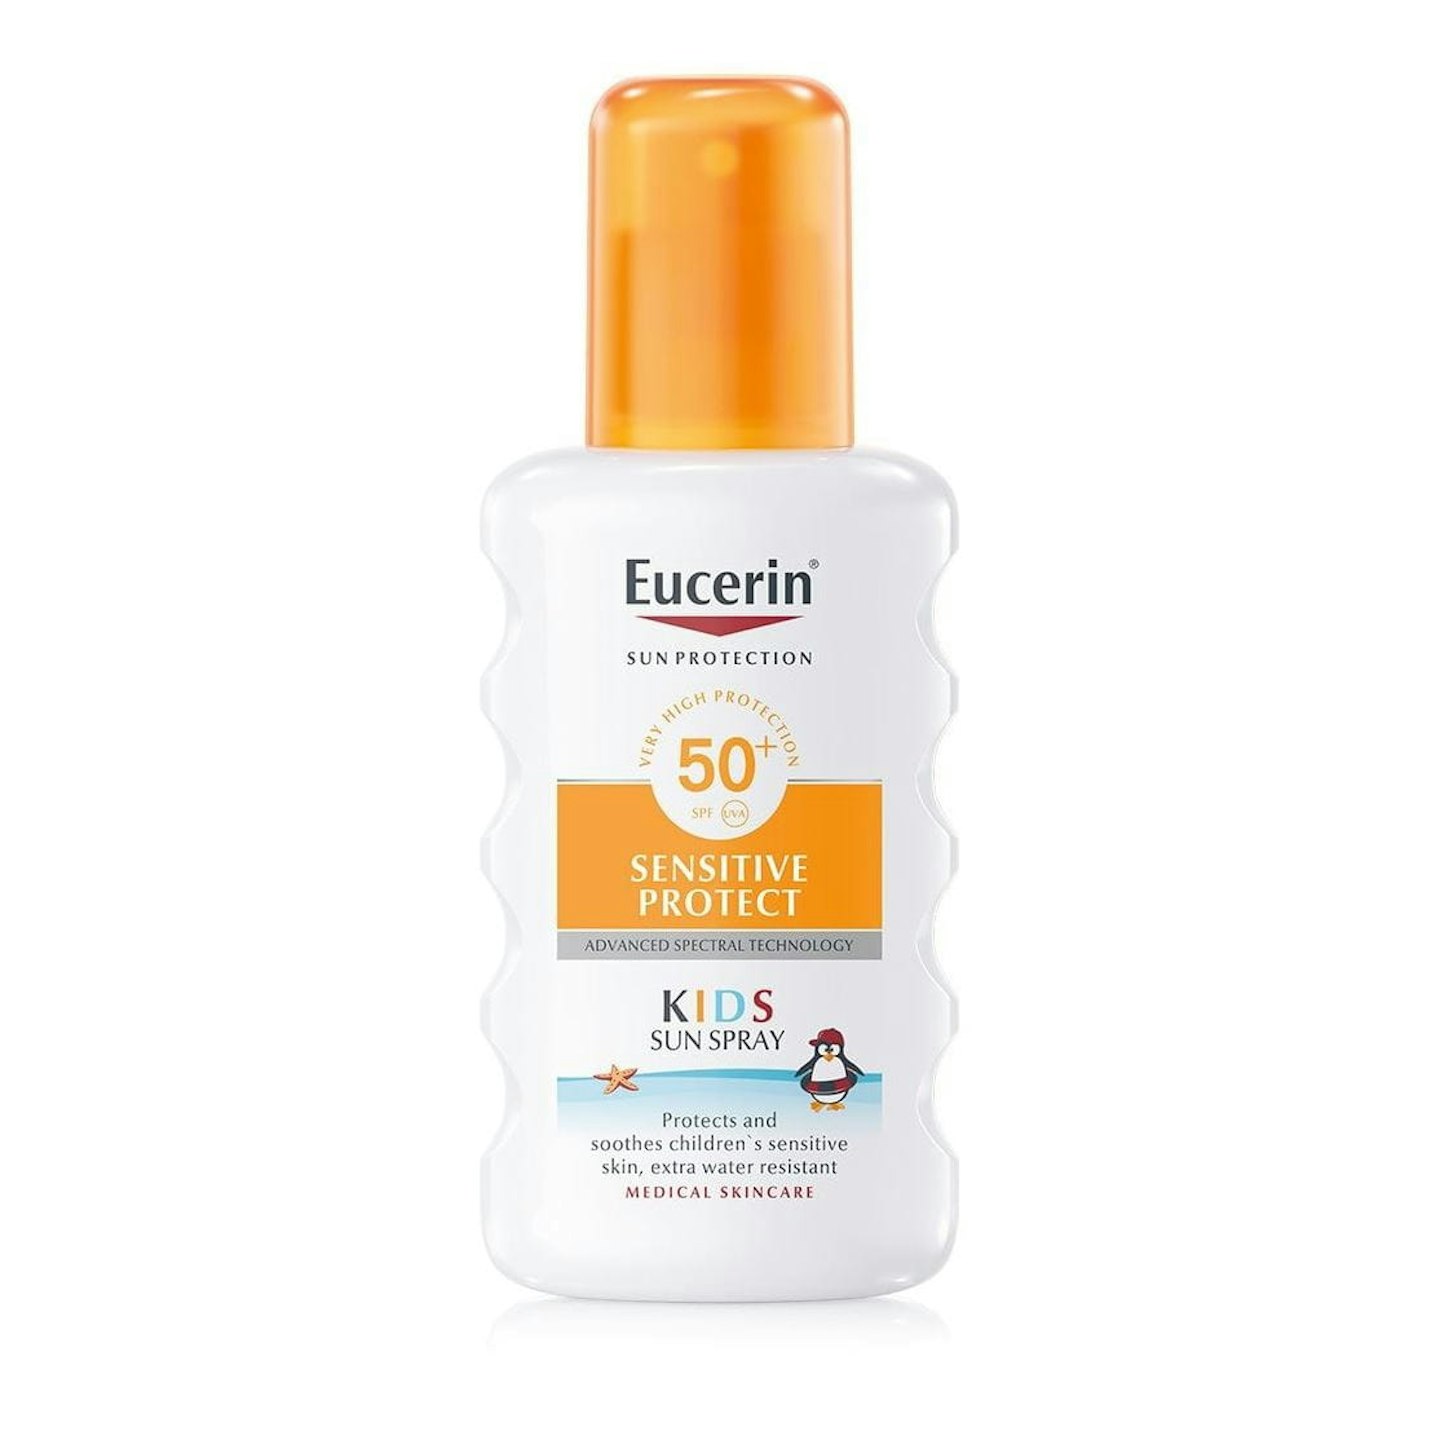 Eucerin Sensitive Protect Kids Sun Spray SPF50+, £19.50